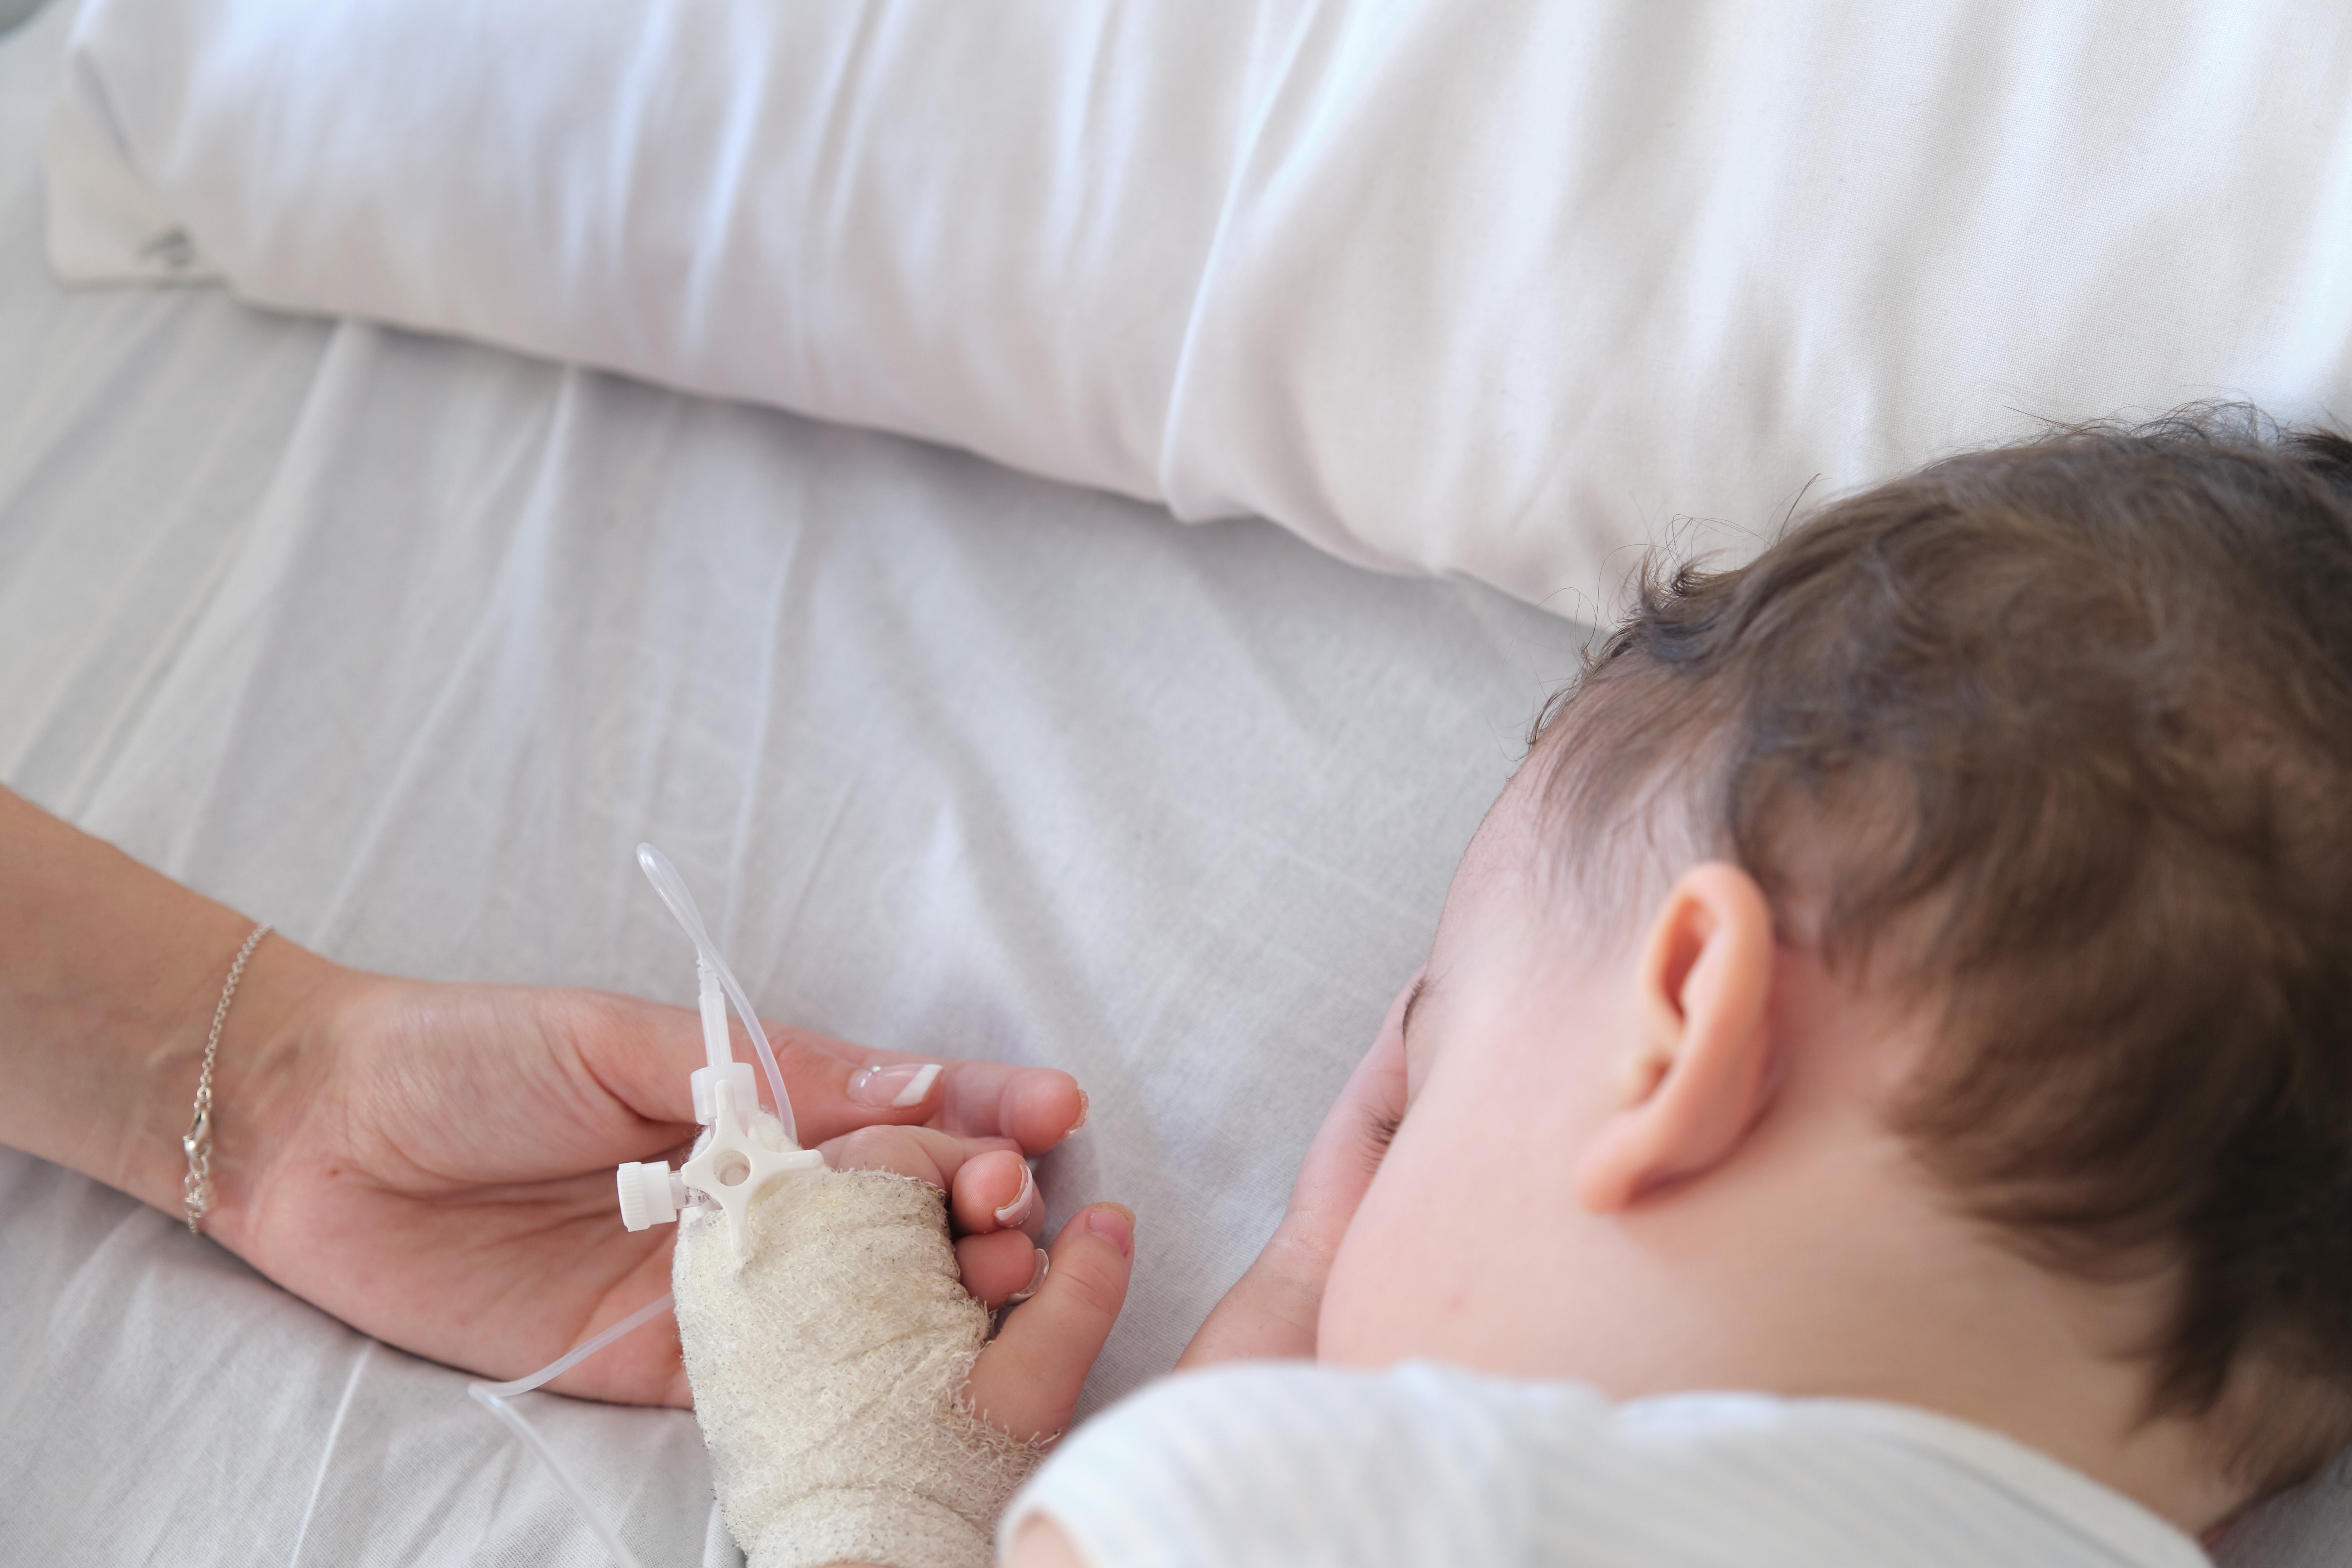 Sick toddler in hospital | Source: Shutterstock